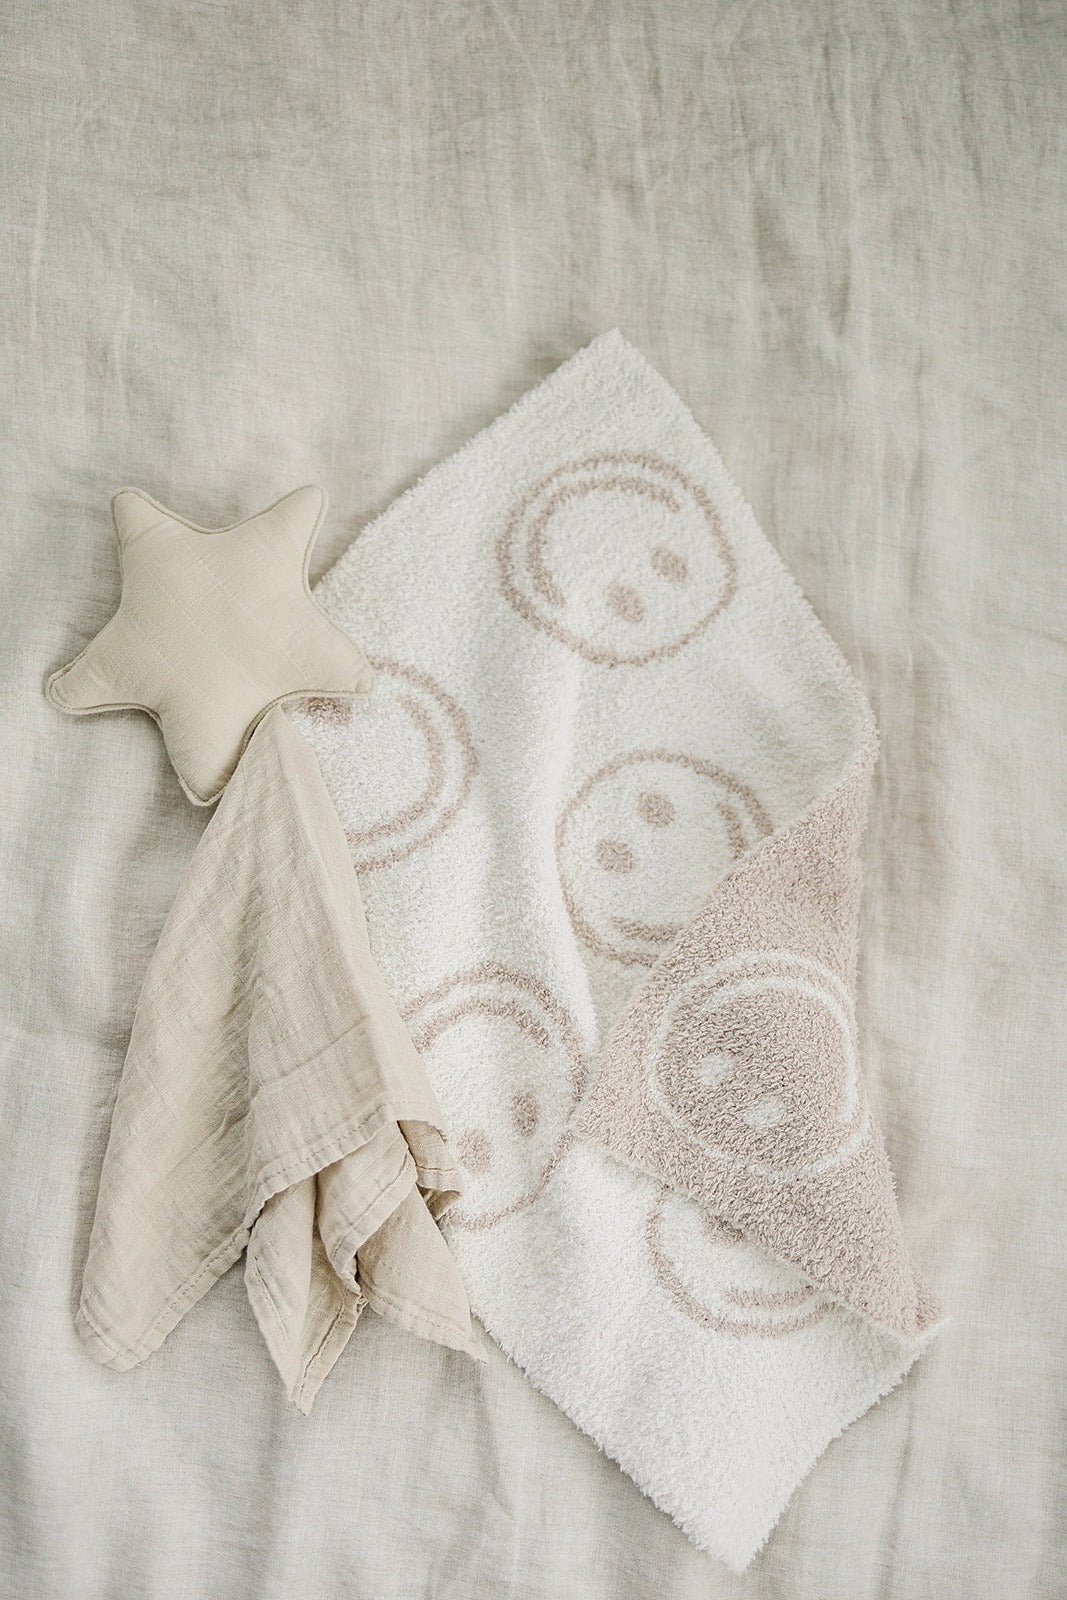 Mebie Baby Plush Blanket - Taupe Smiley